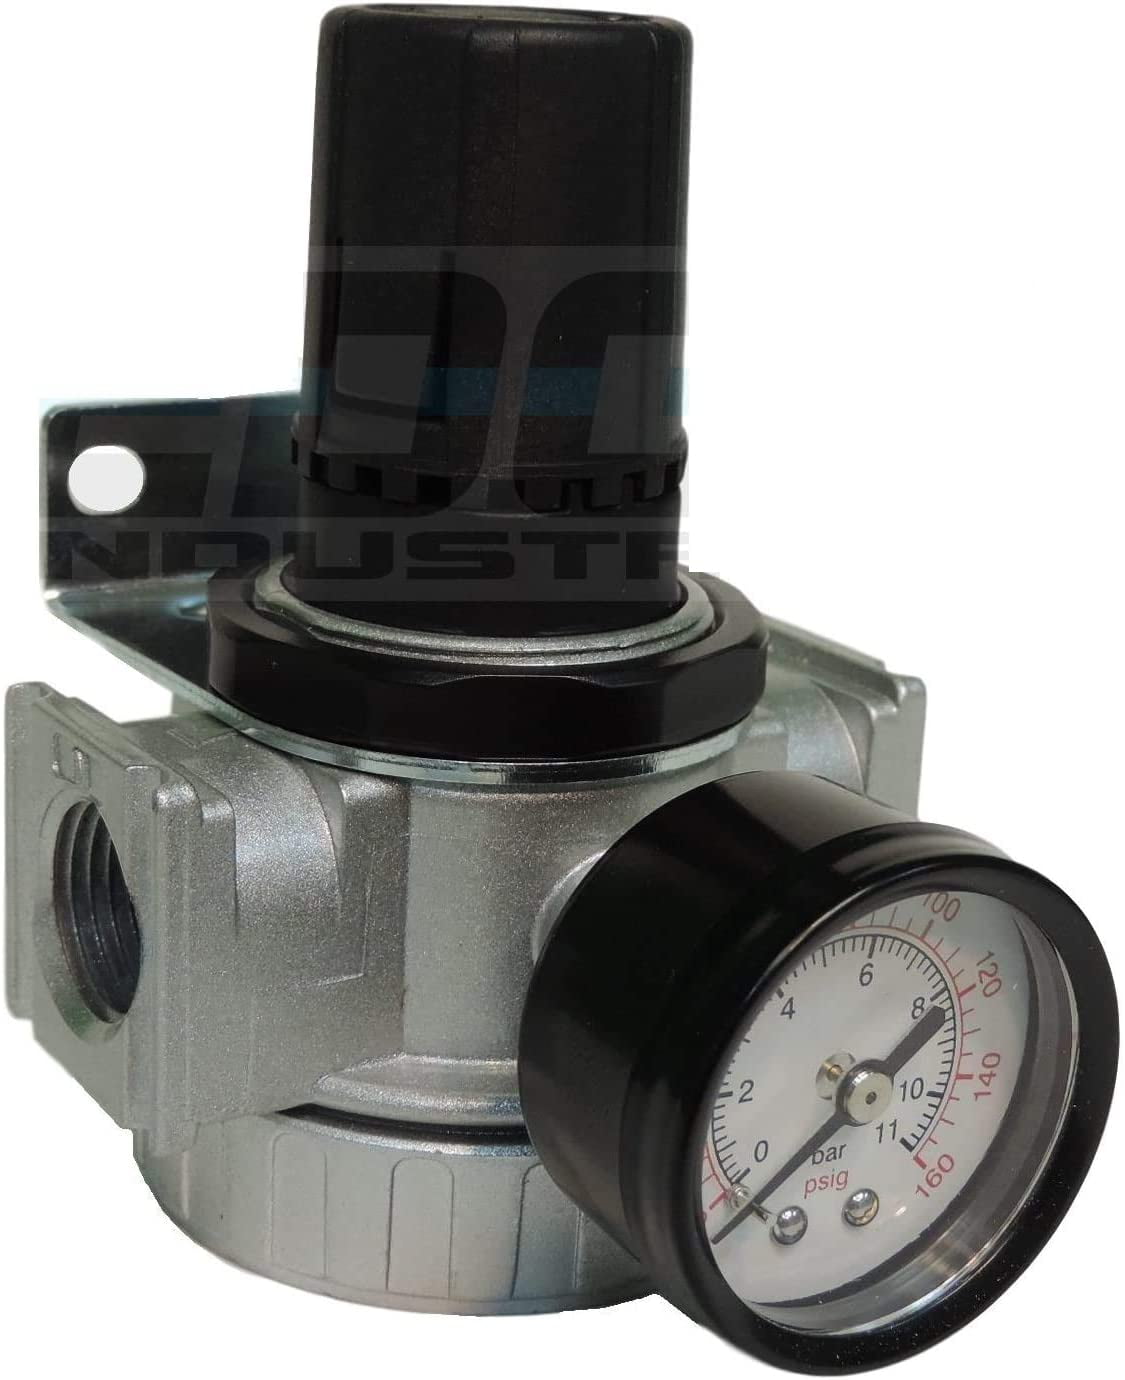 1/2" Air Pressure Regulator for Compressed Air Compressor w/ Gauge 